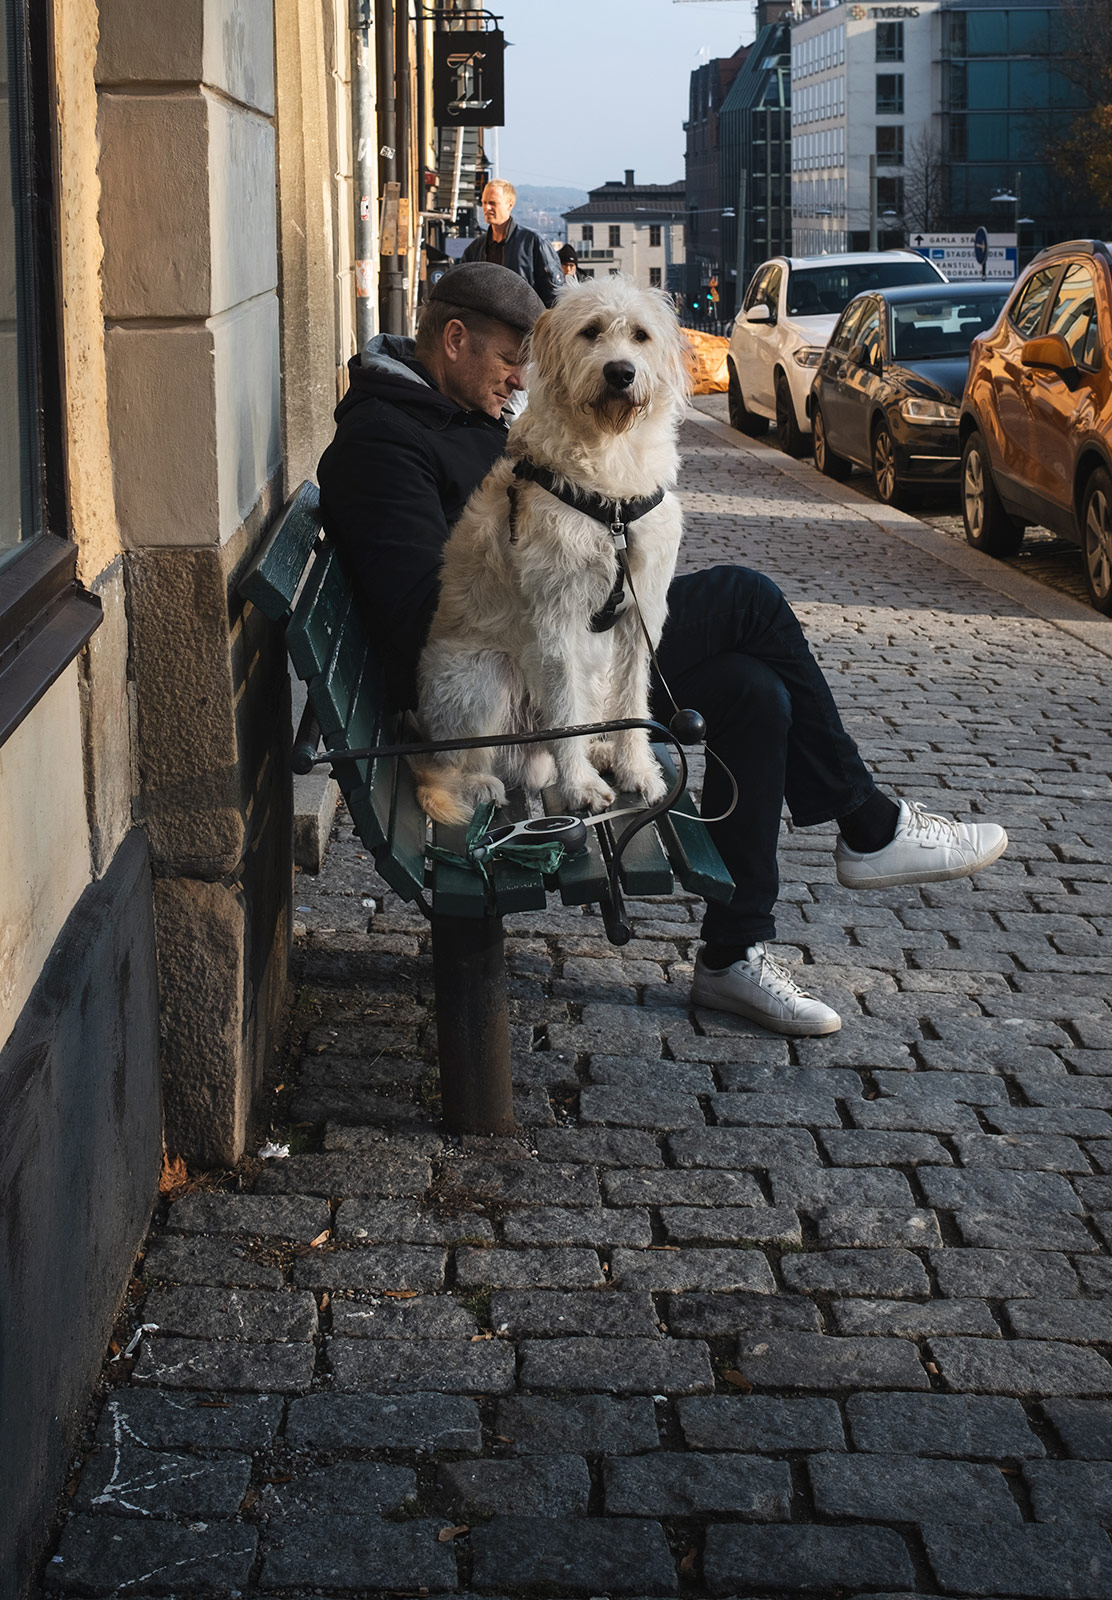 Big dog sat on bench